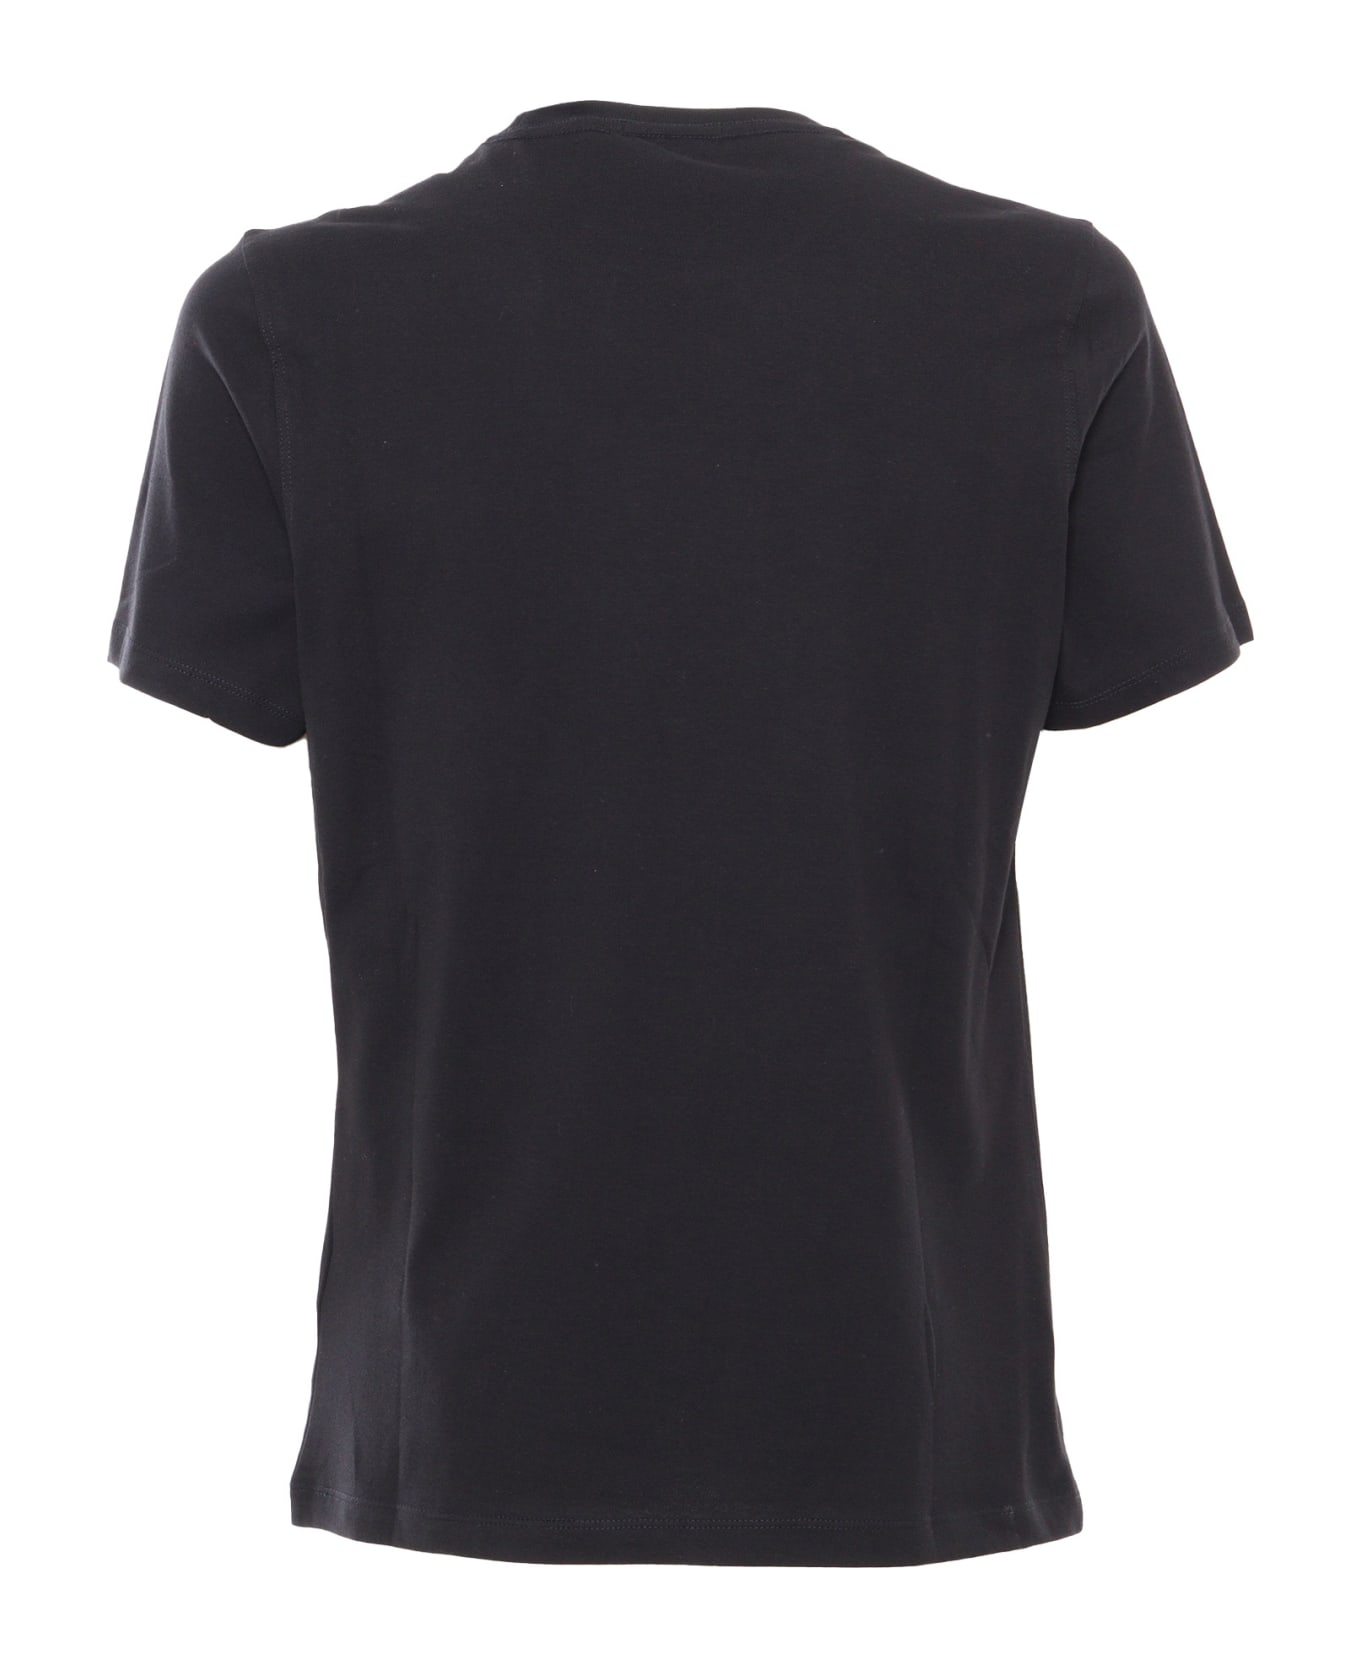 Barbour Black Printed T-shirt - BLACK